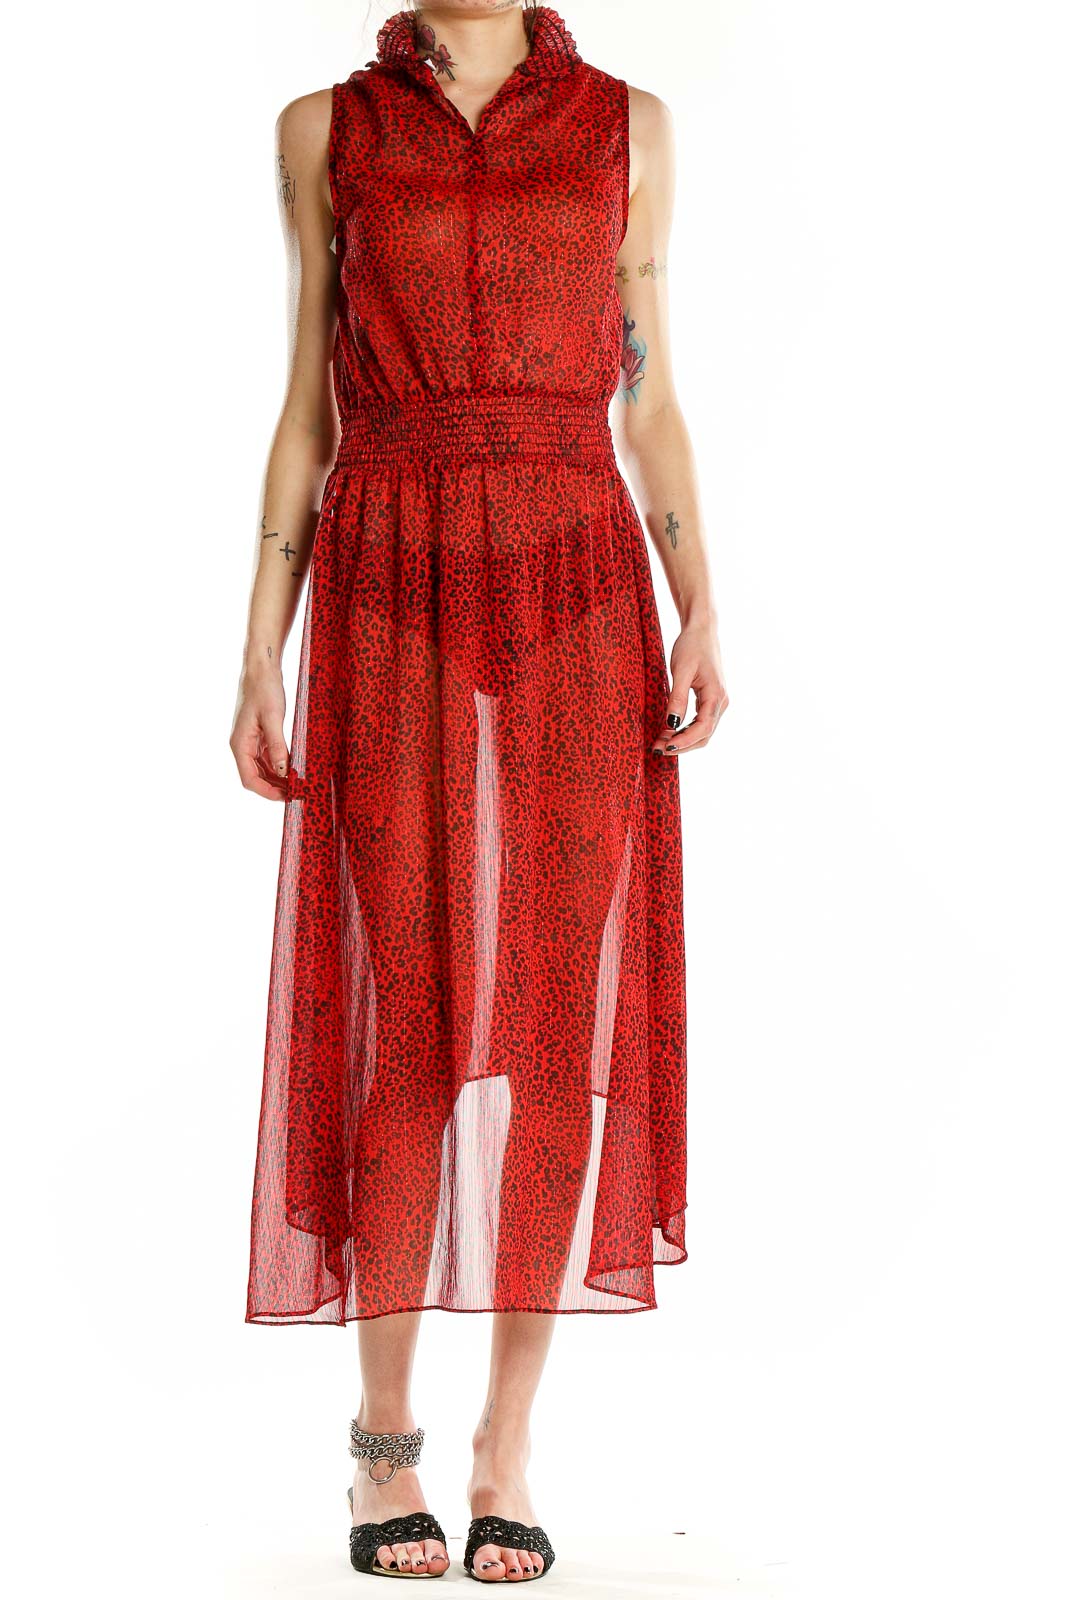 Red Animal Print Semi-Sheer Dress Front